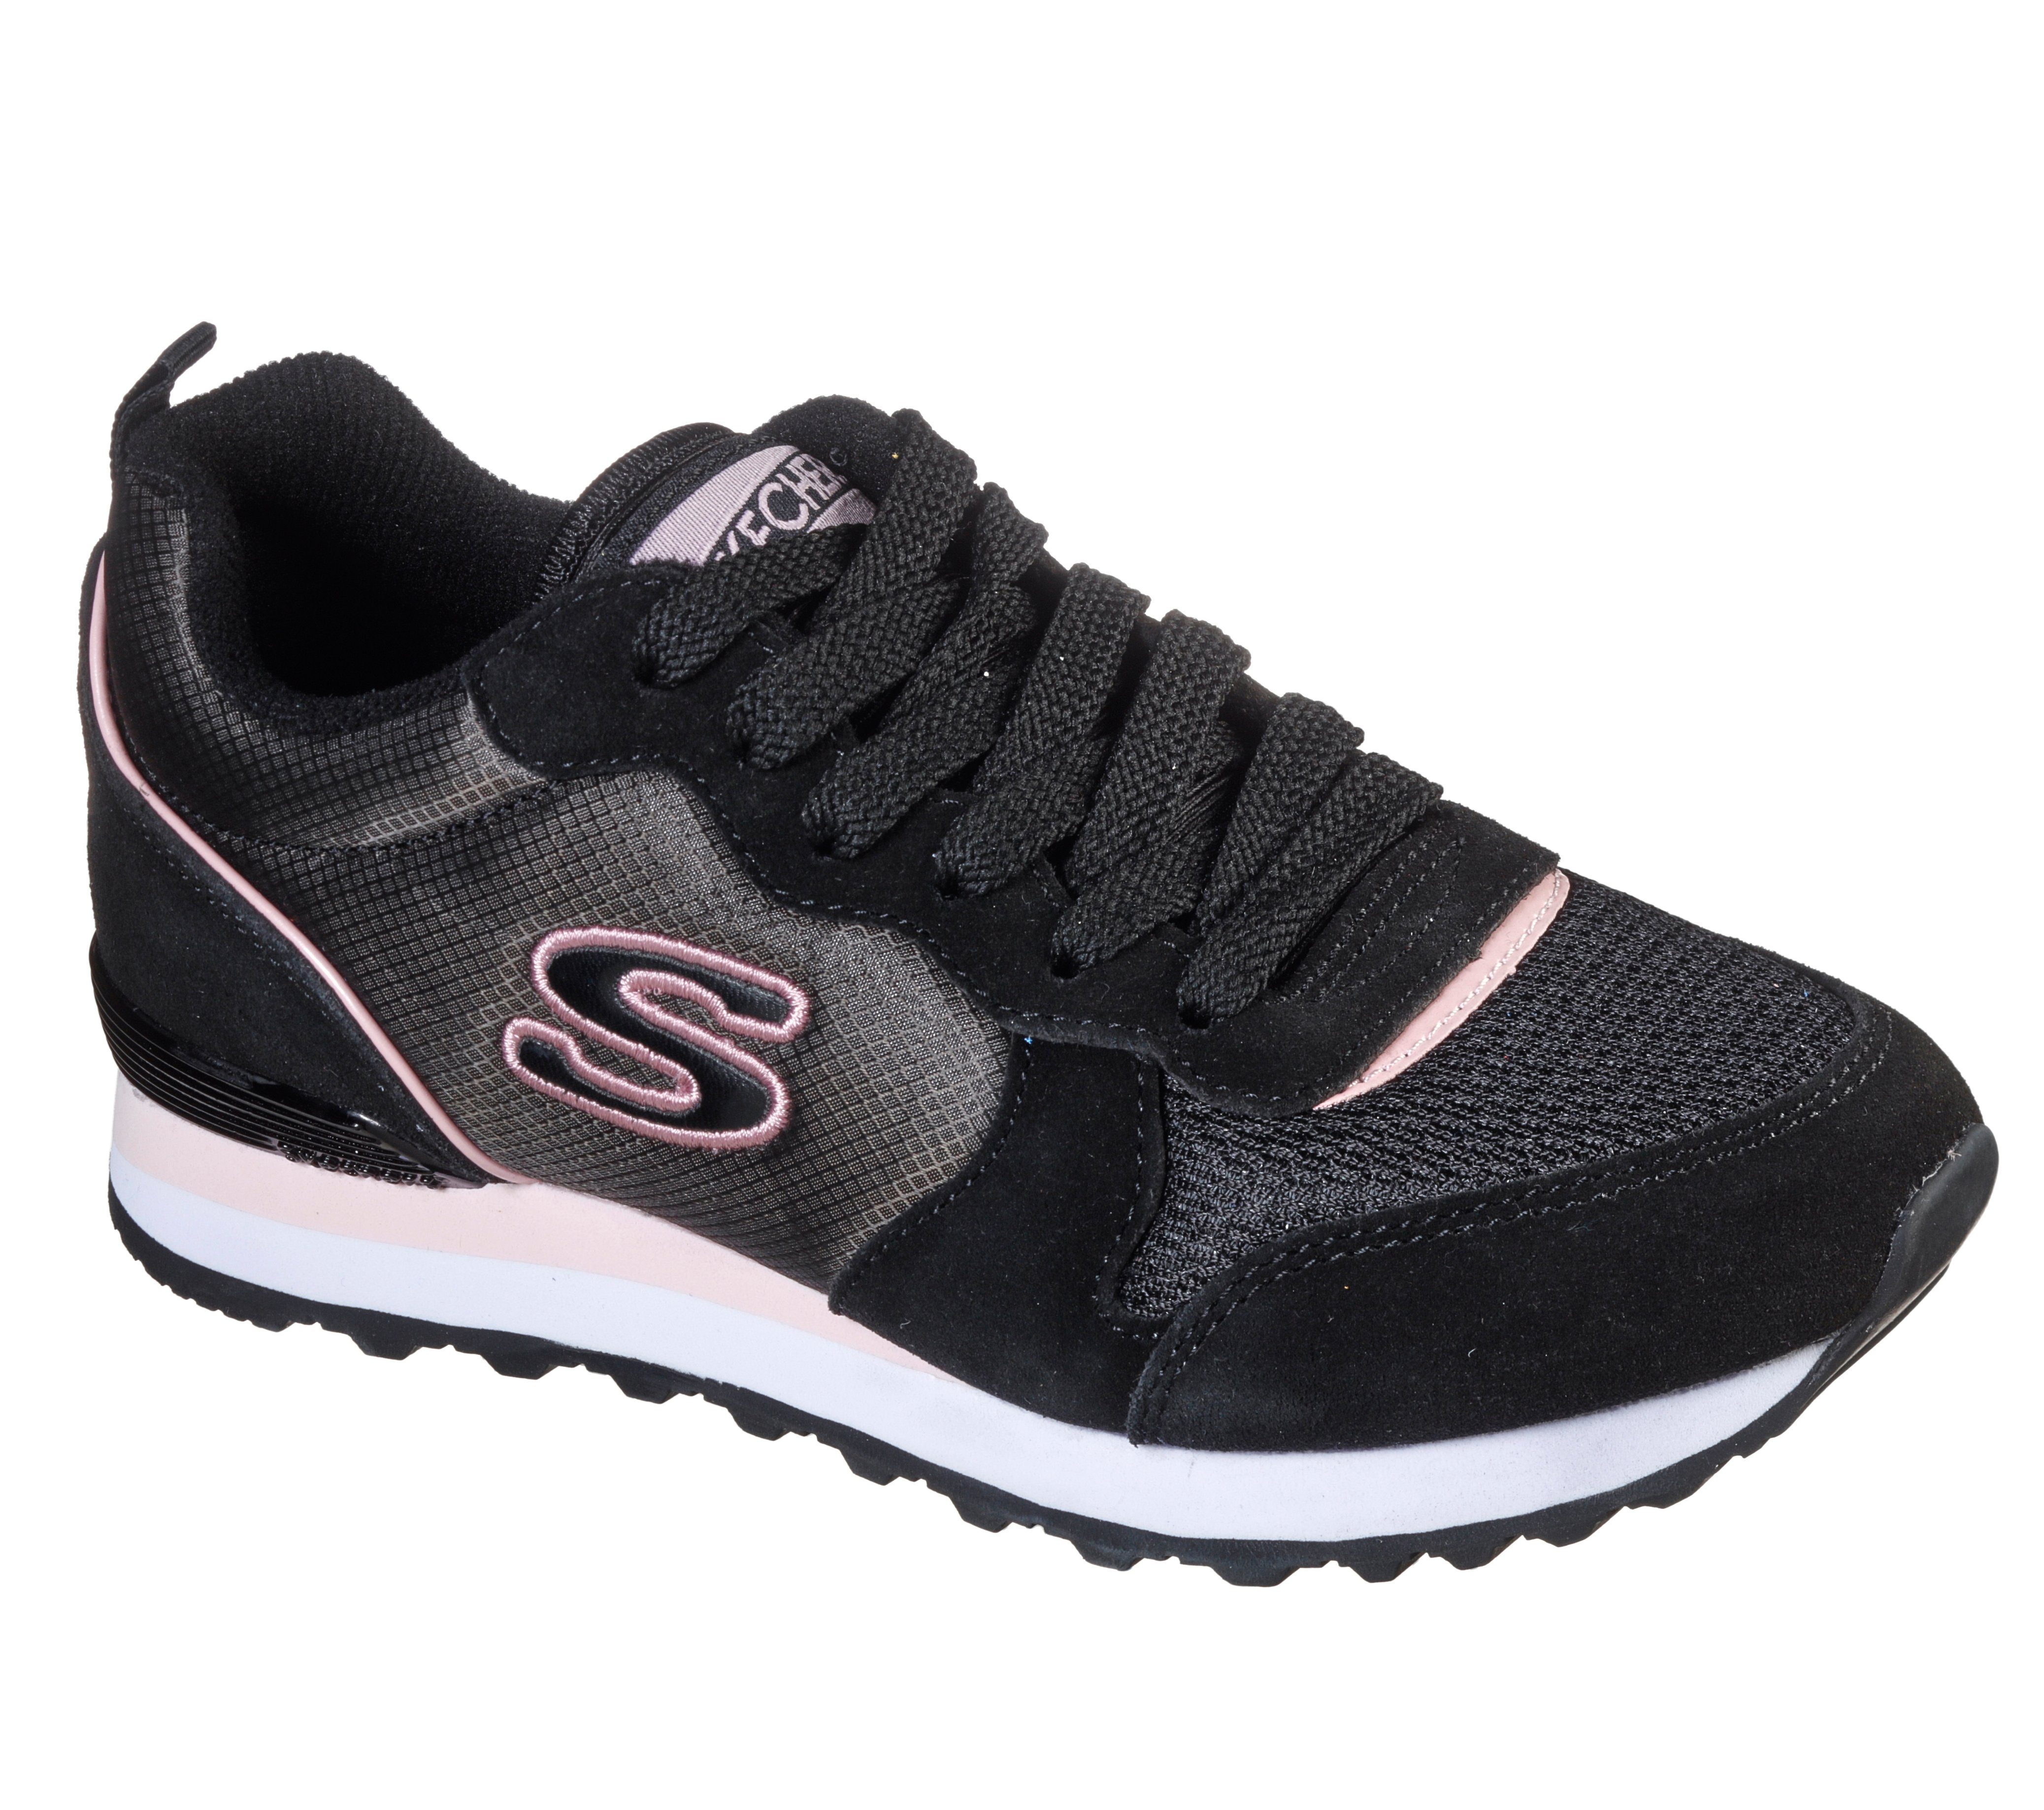 Skechers Nylon Sneaker Up Lace modischen Quarter Jogger im schwarz-rosa Kontrastlook